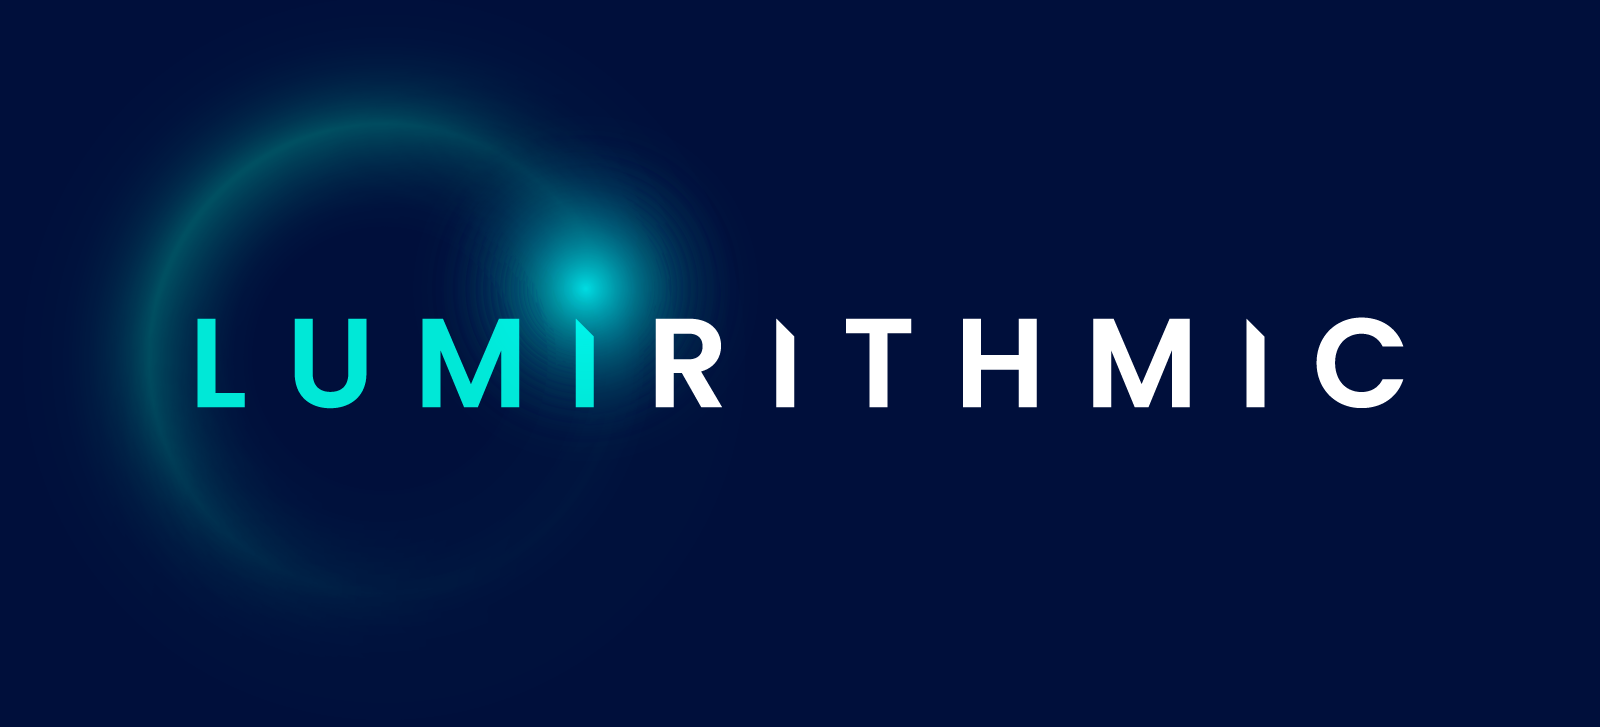 Lumirithmic-logo.png